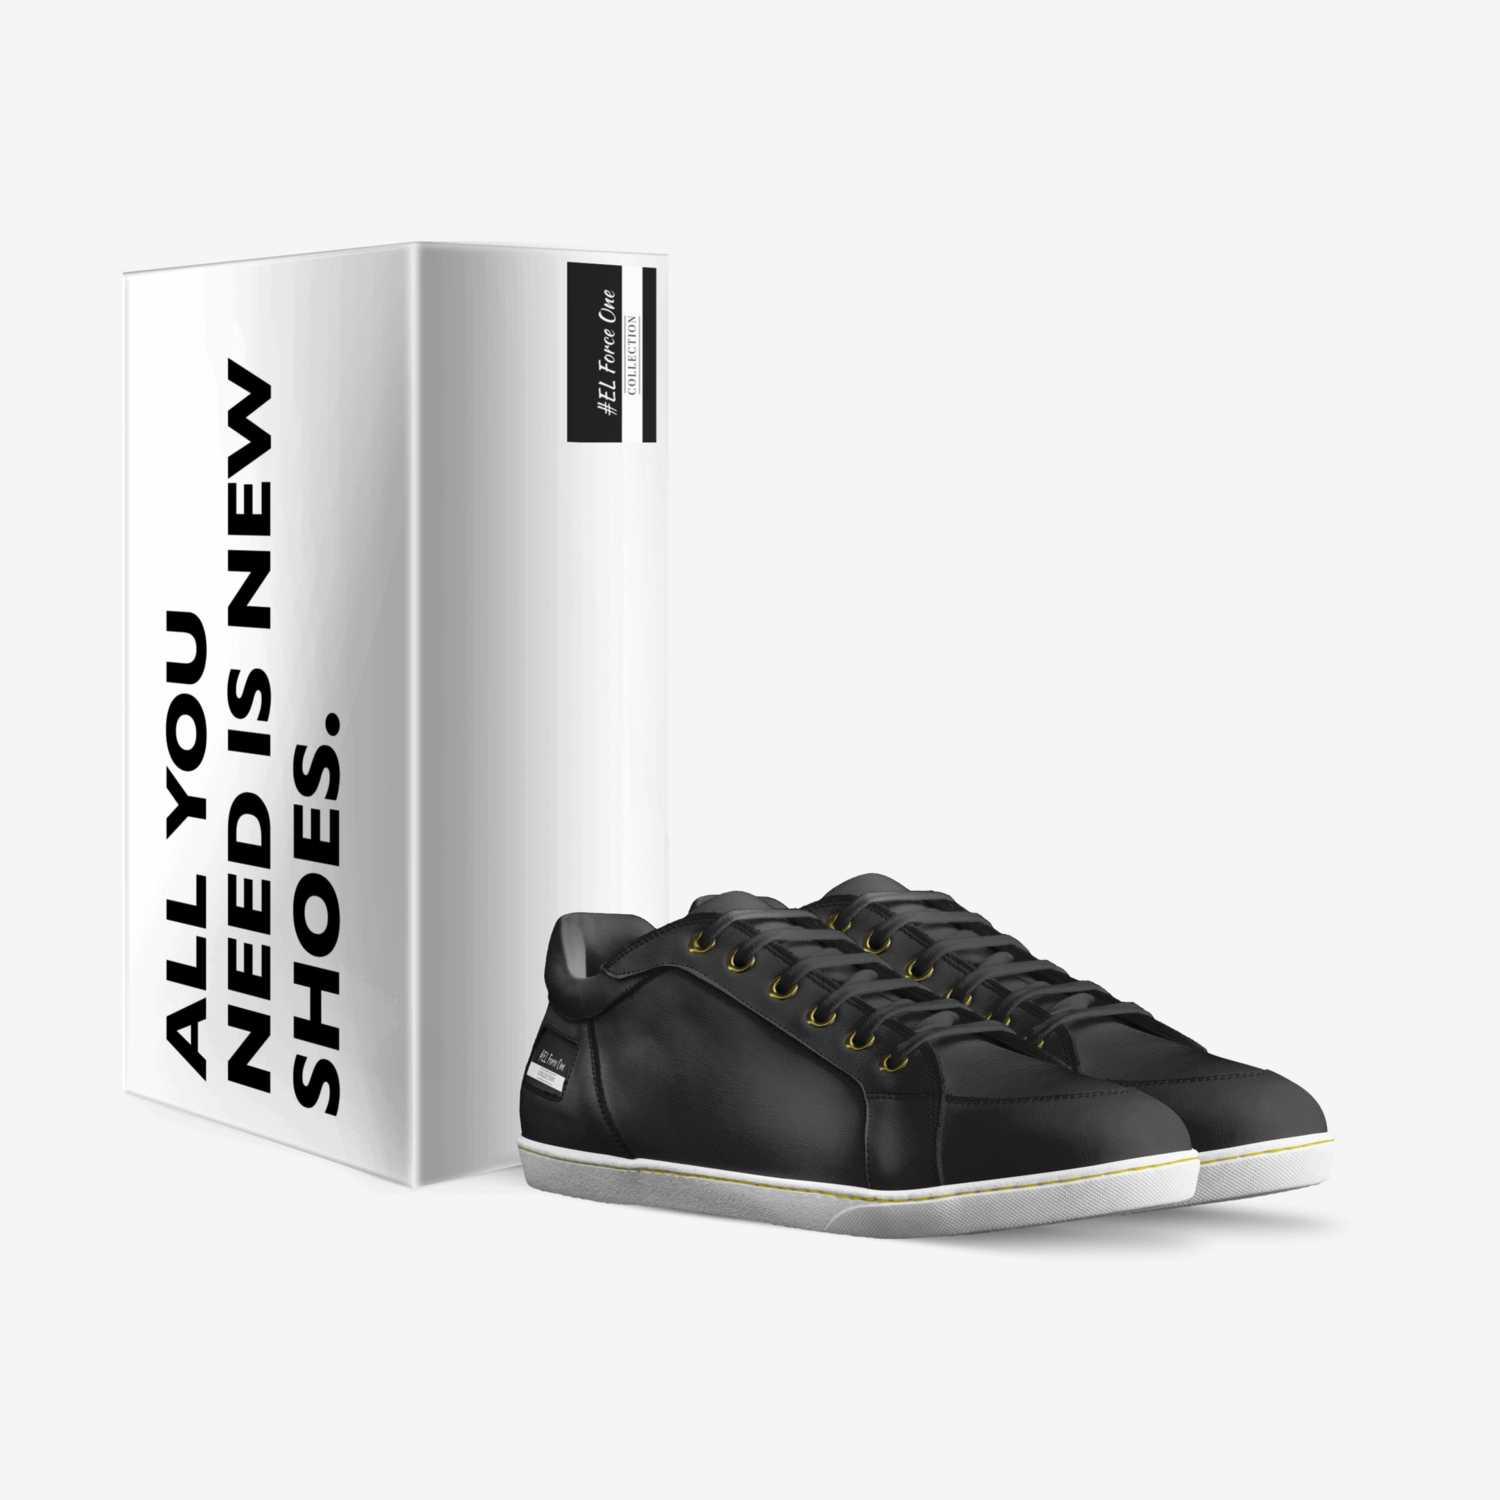 #EL Force One custom made in Italy shoes by Edoardo Lanteri | Box view